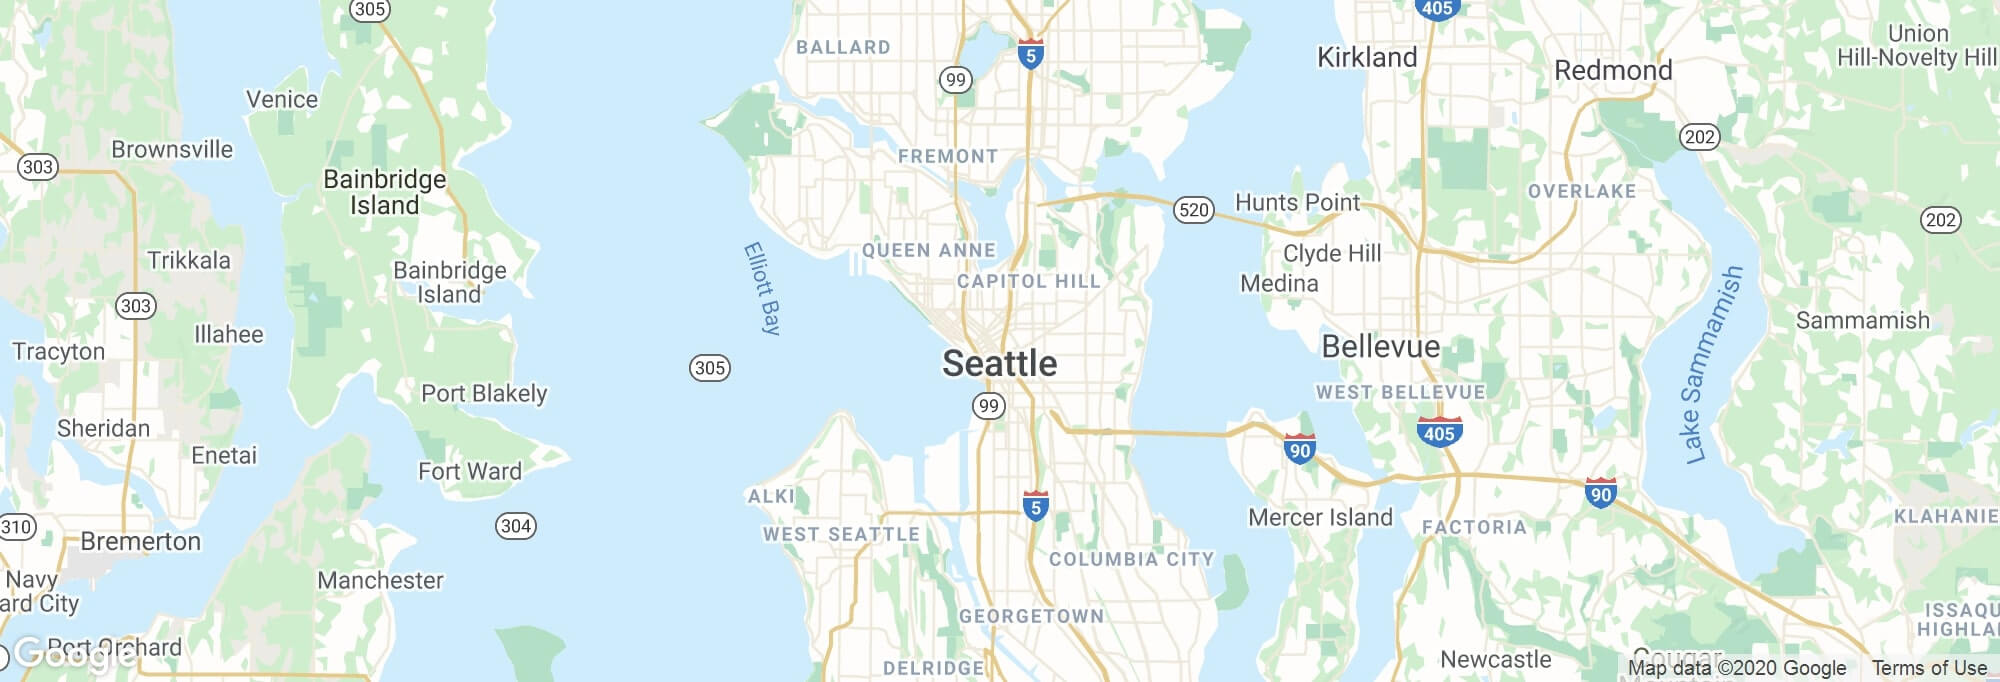 Seattle city map